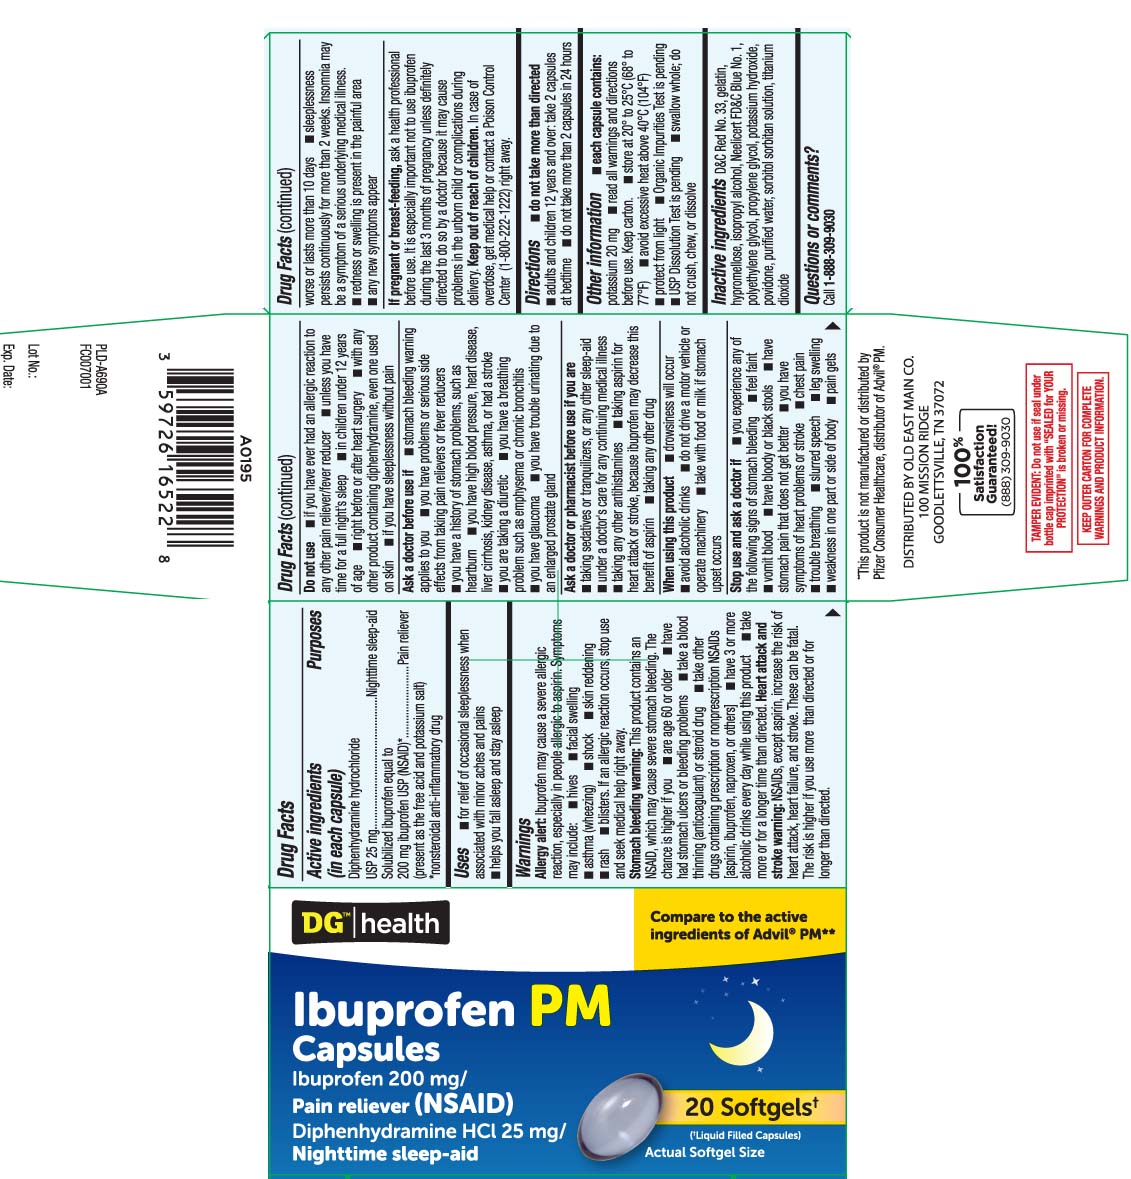 Diphenhydramine hydrochloride USP 25 mg Solubilized ibuprofen equal to 200 mg ibuprofen USP (NSAID)* (present as the free acid and potassium salt) *nonsteroidal anti-inflammatory drug